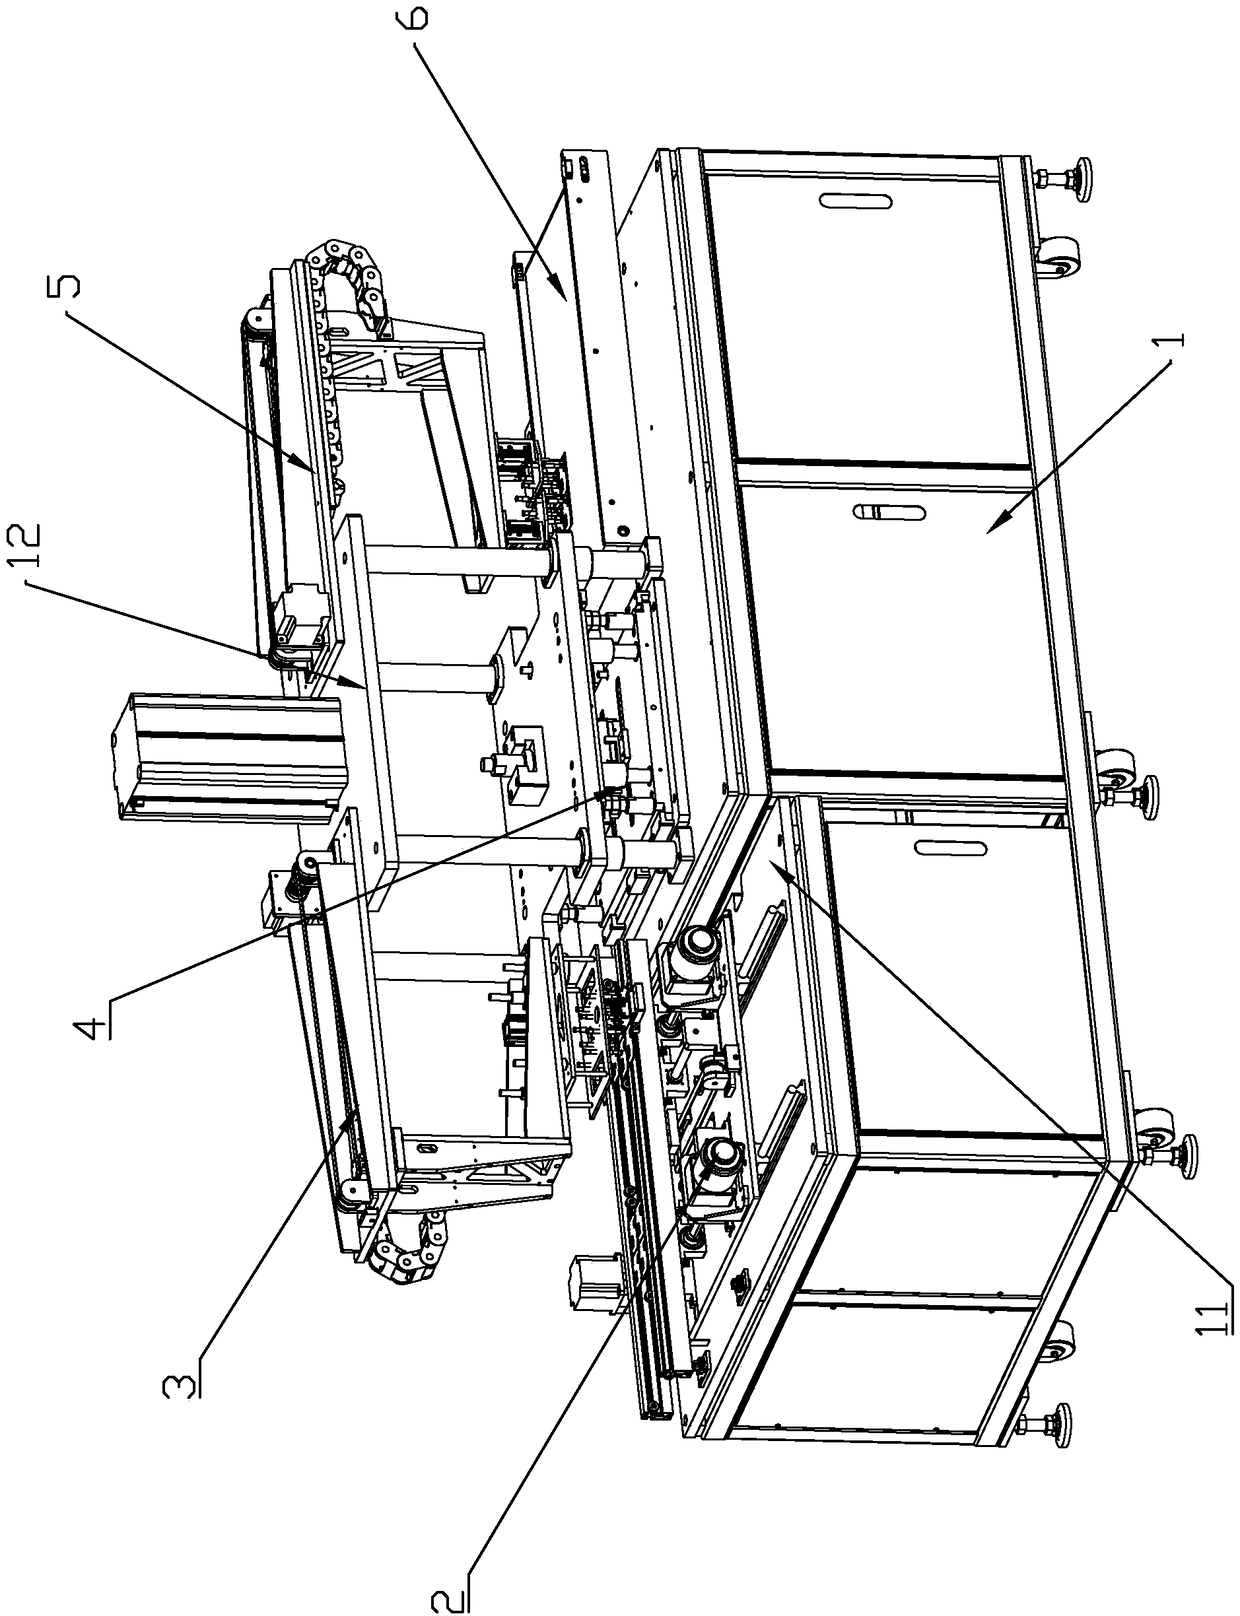 Full-automatic PCB board splitting machine